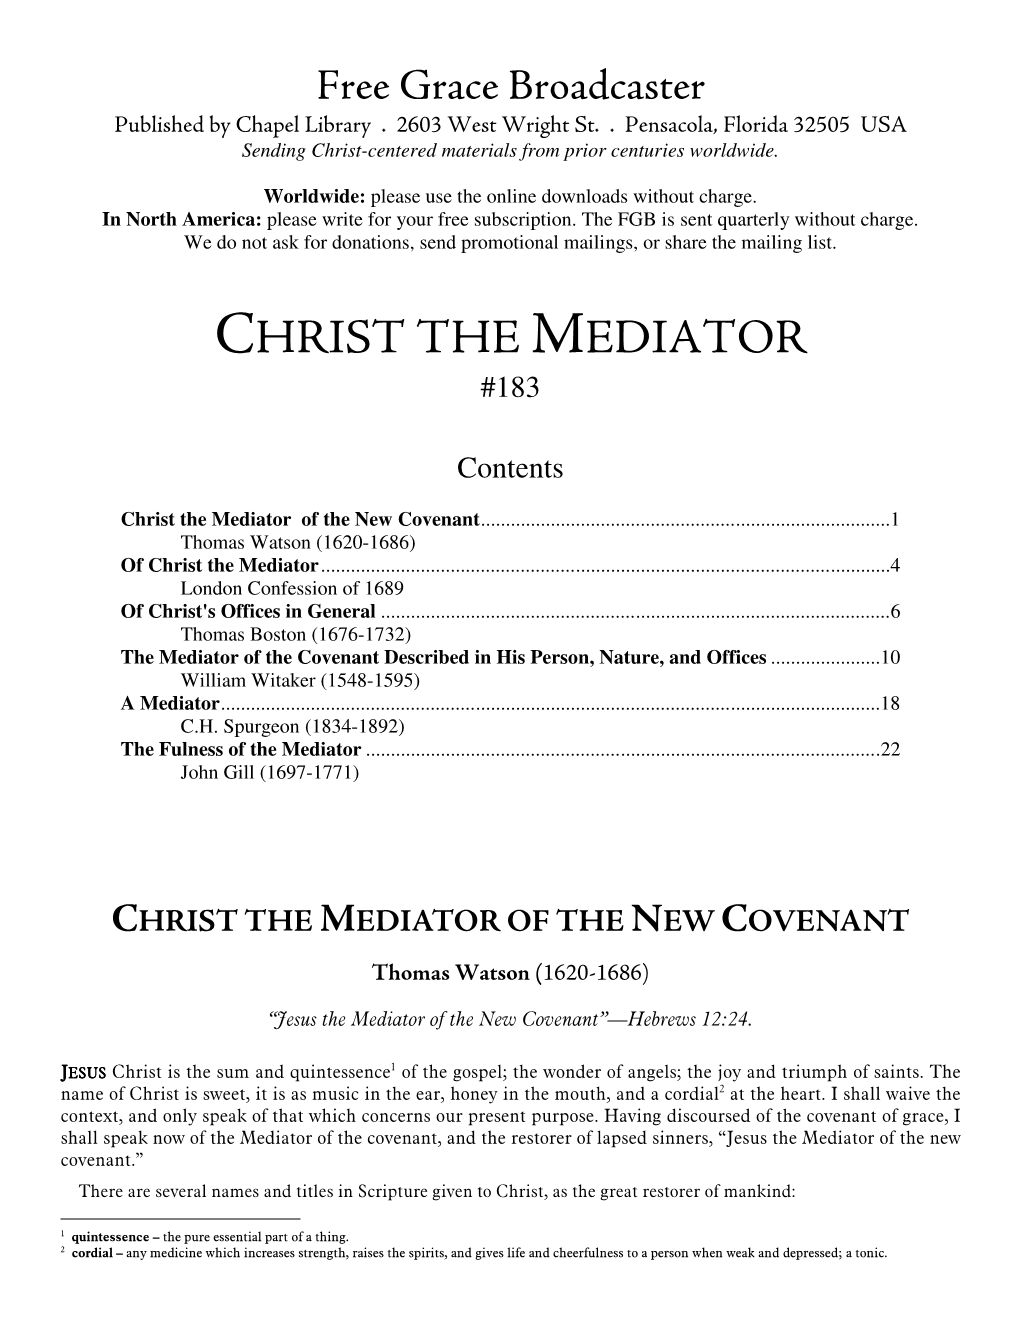 Christ the Mediator (FGB #183)